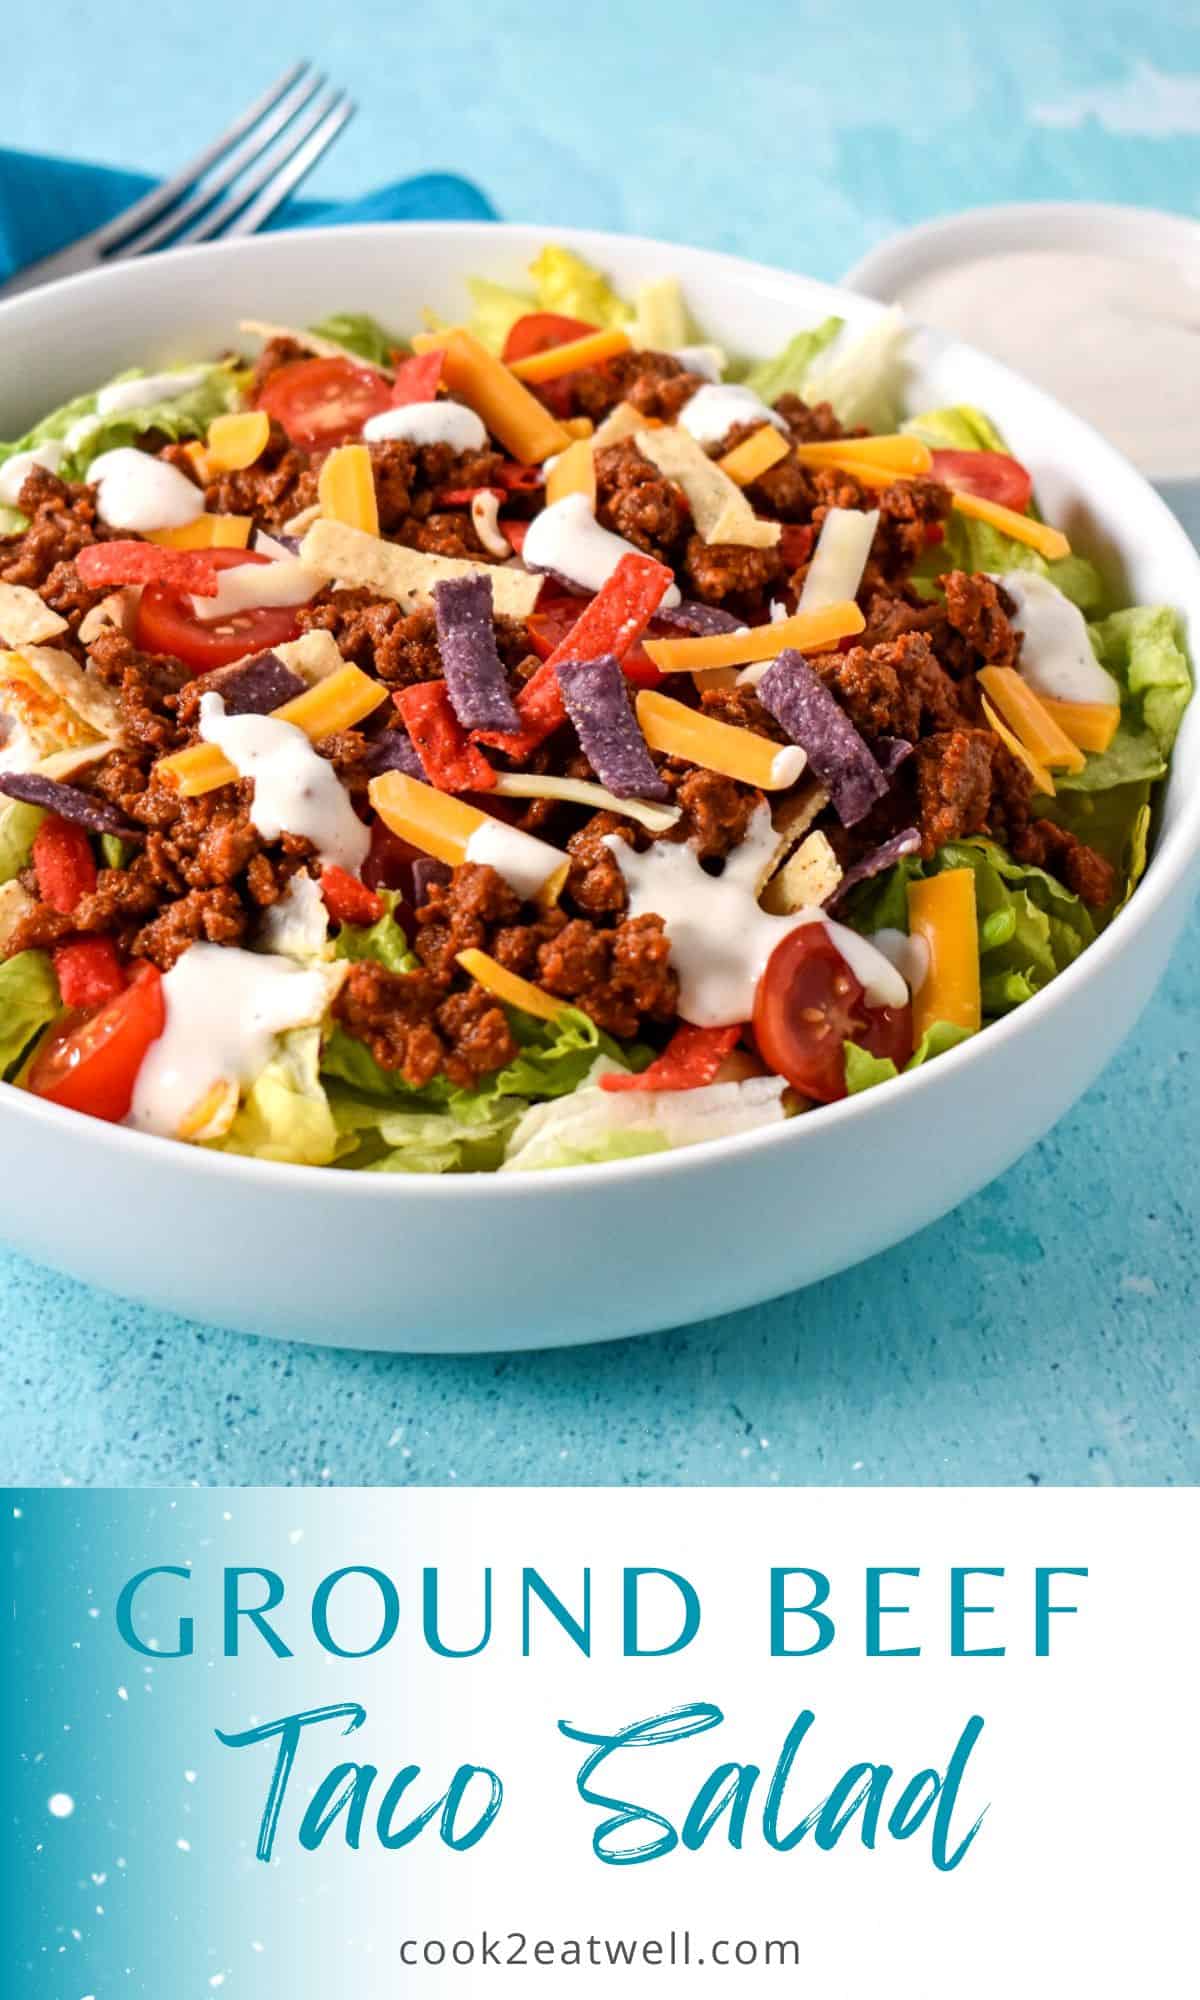 Ground Beef Taco Salad - Cook2eatwell